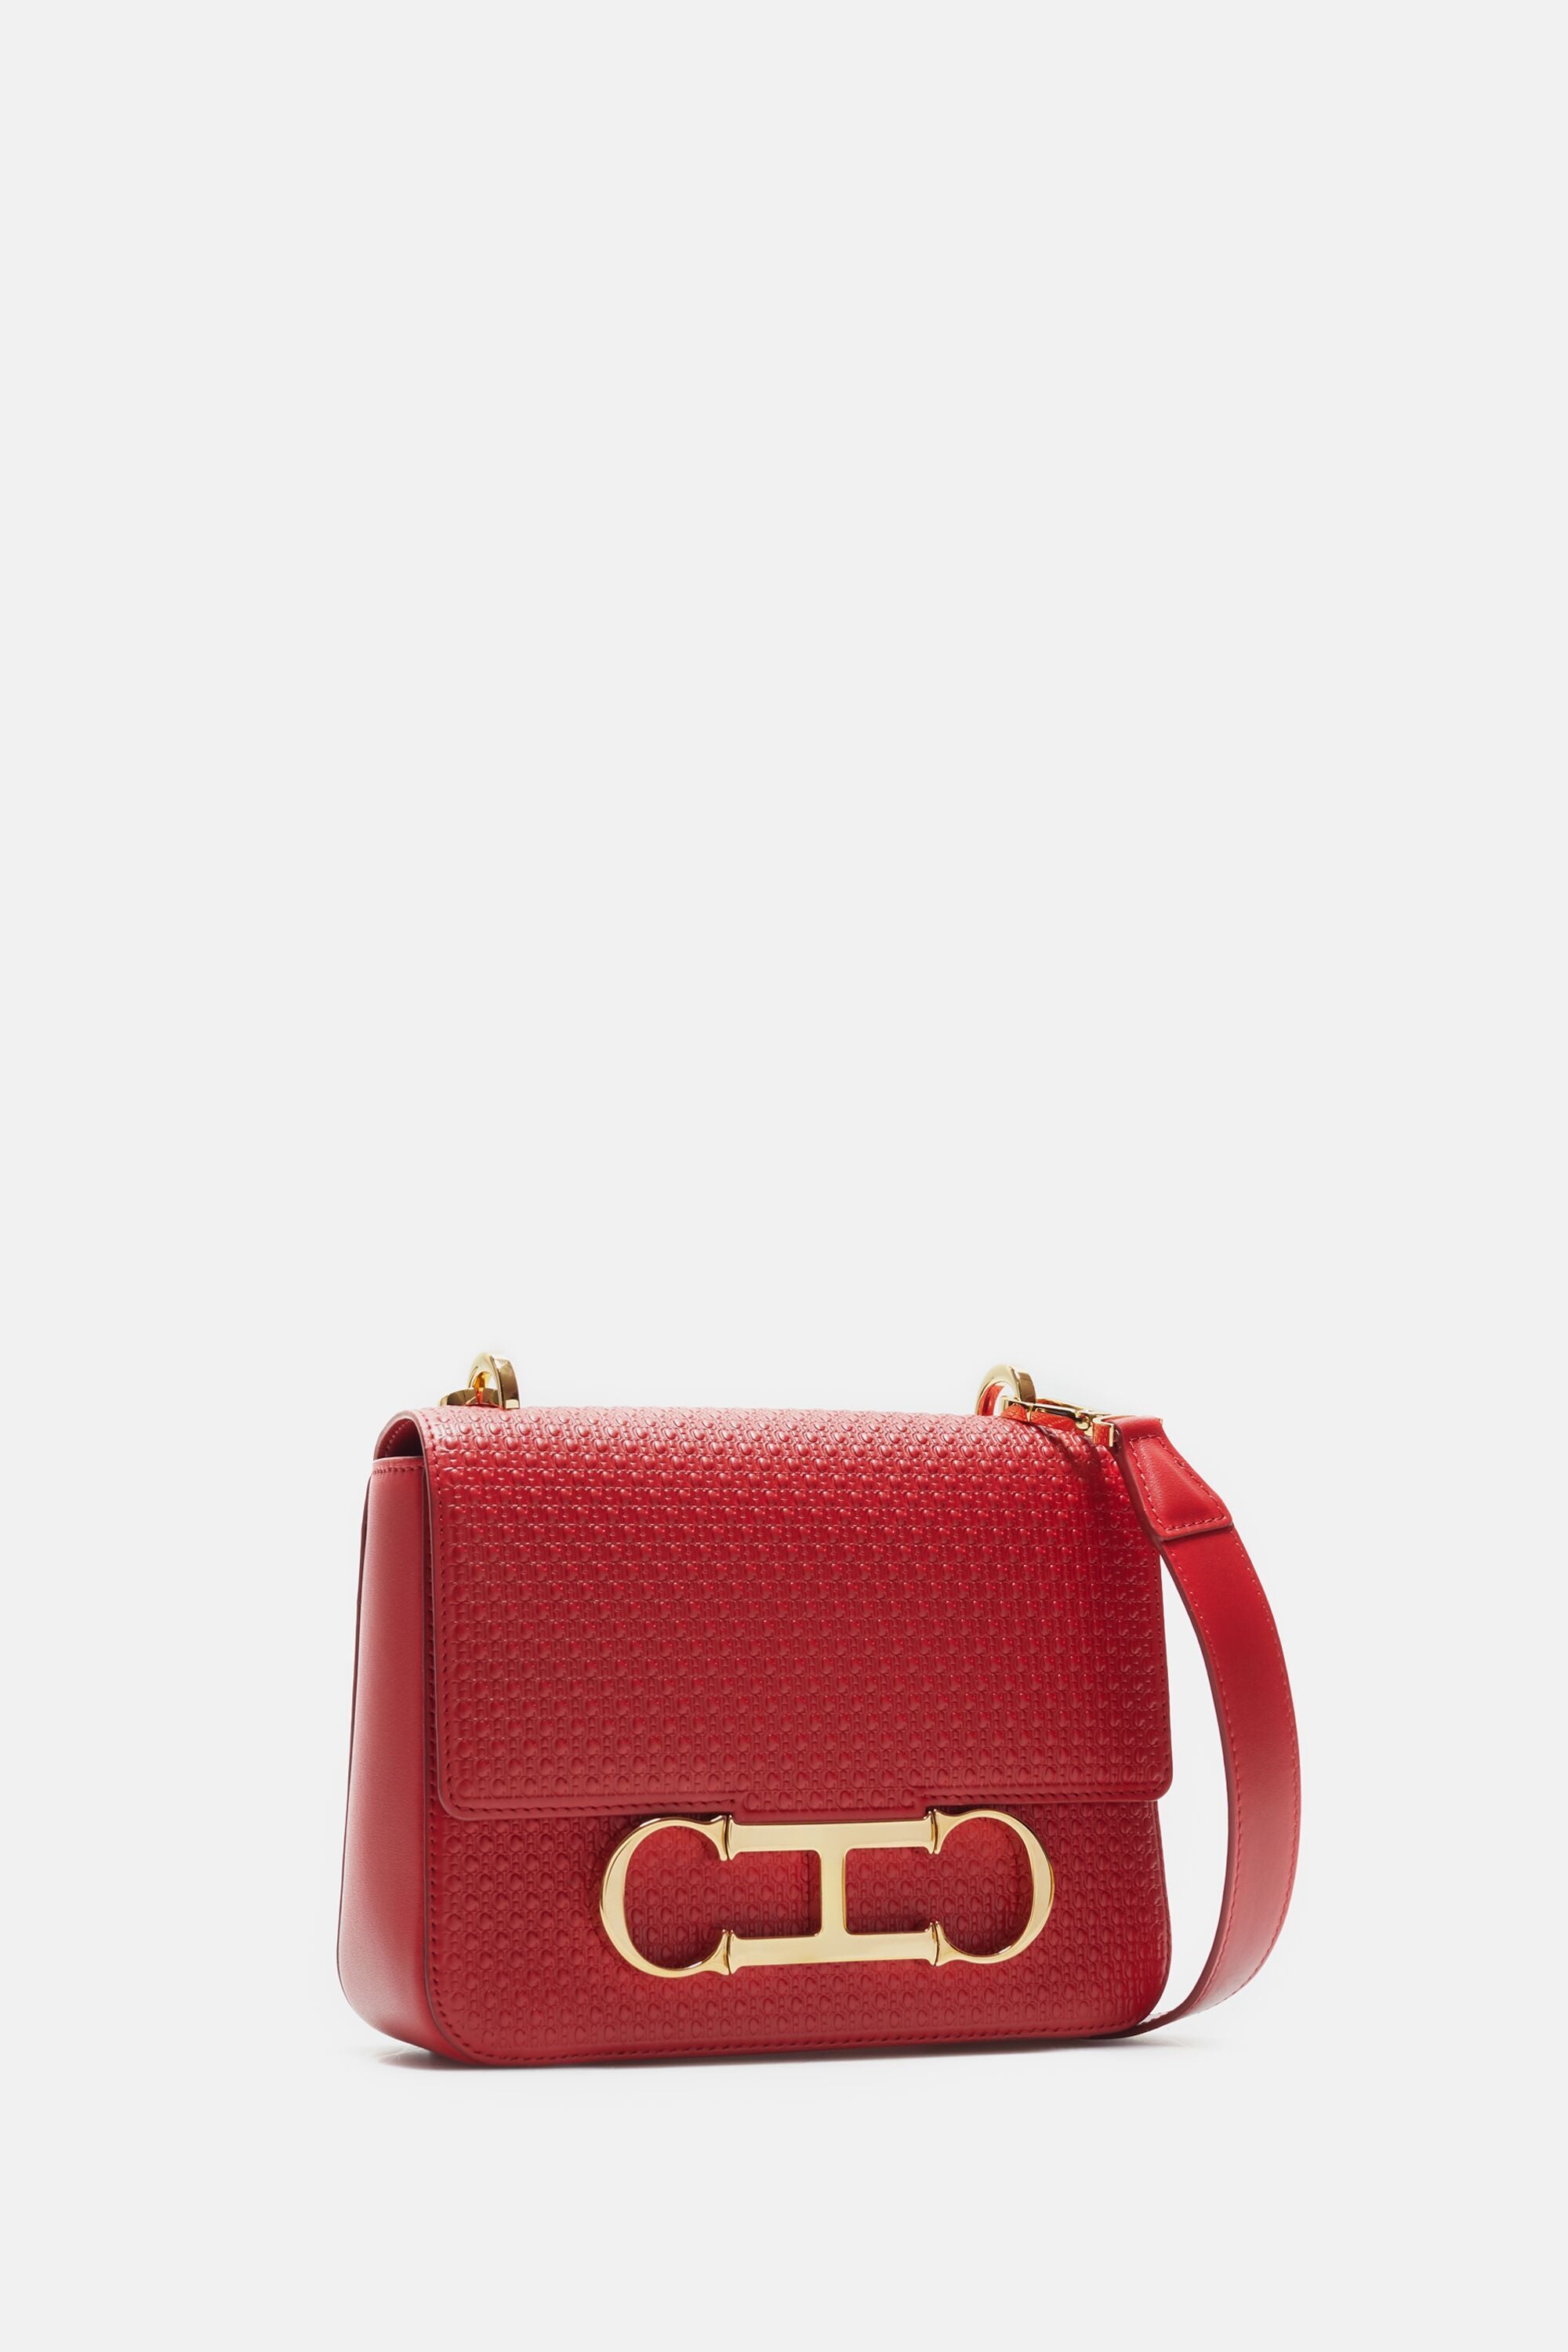 Carolina Herrera Shopping Bag Beige Red Stripe